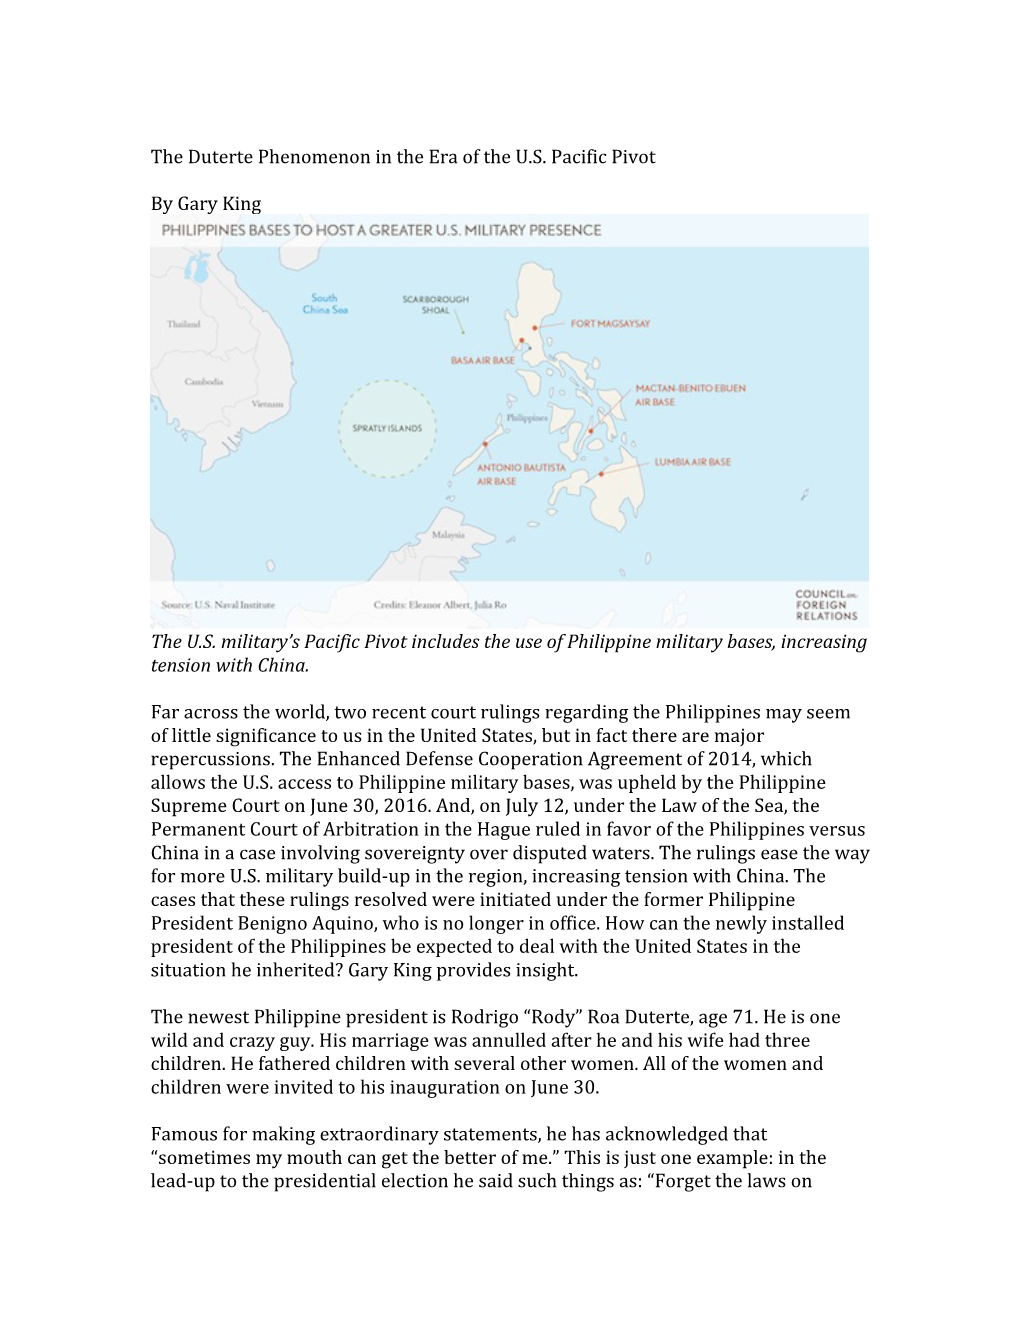 The Duterte Phenomenon in the Era of the U.S. Pacific Pivot by Gary King